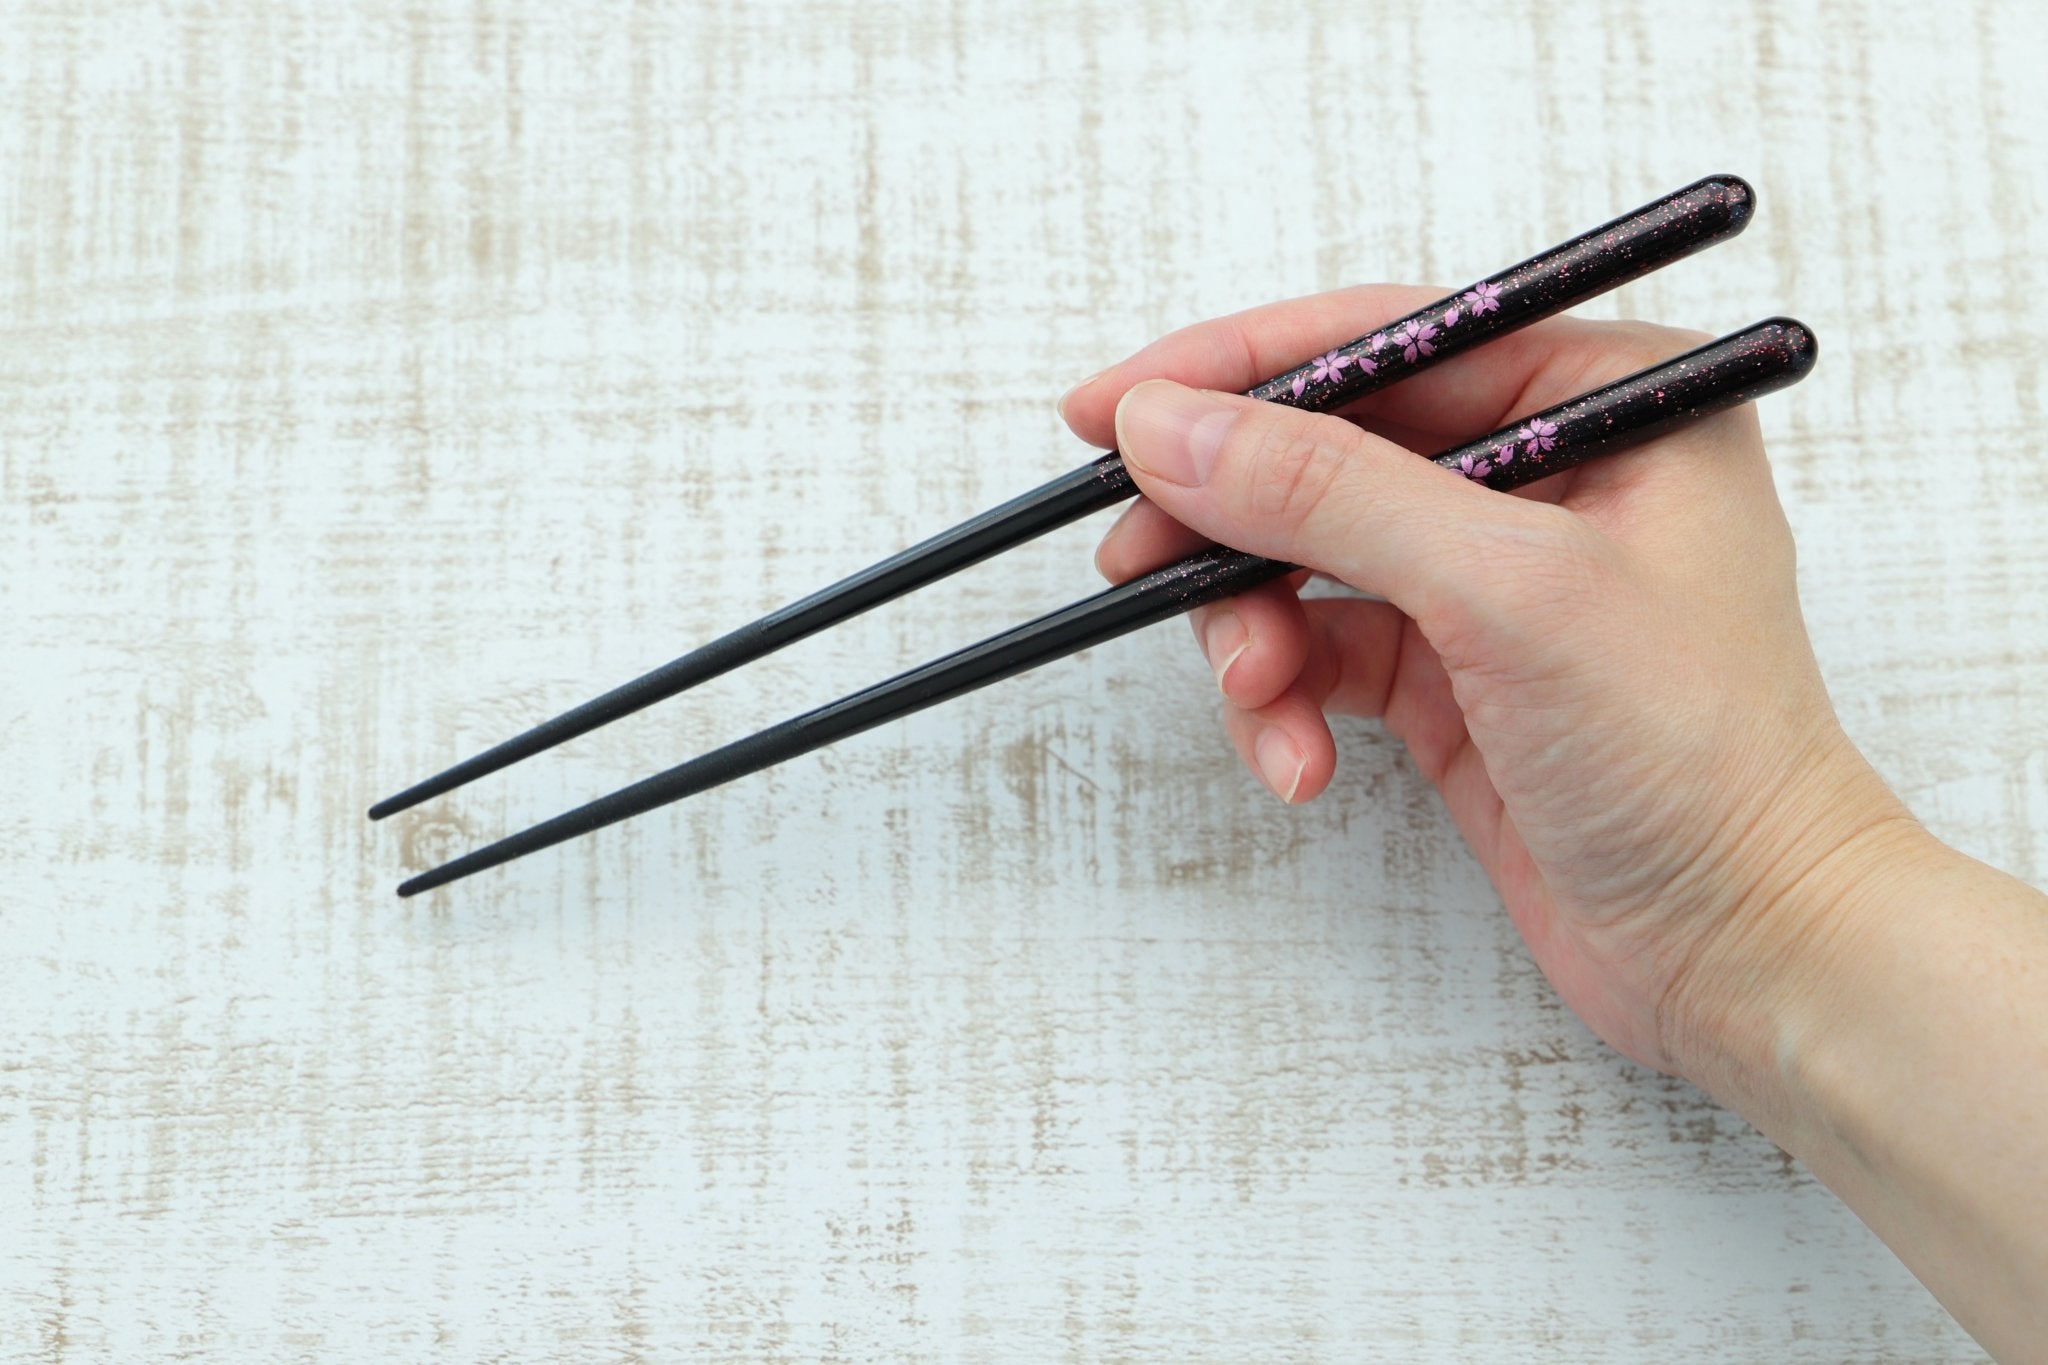 How to hold chopsticks 3